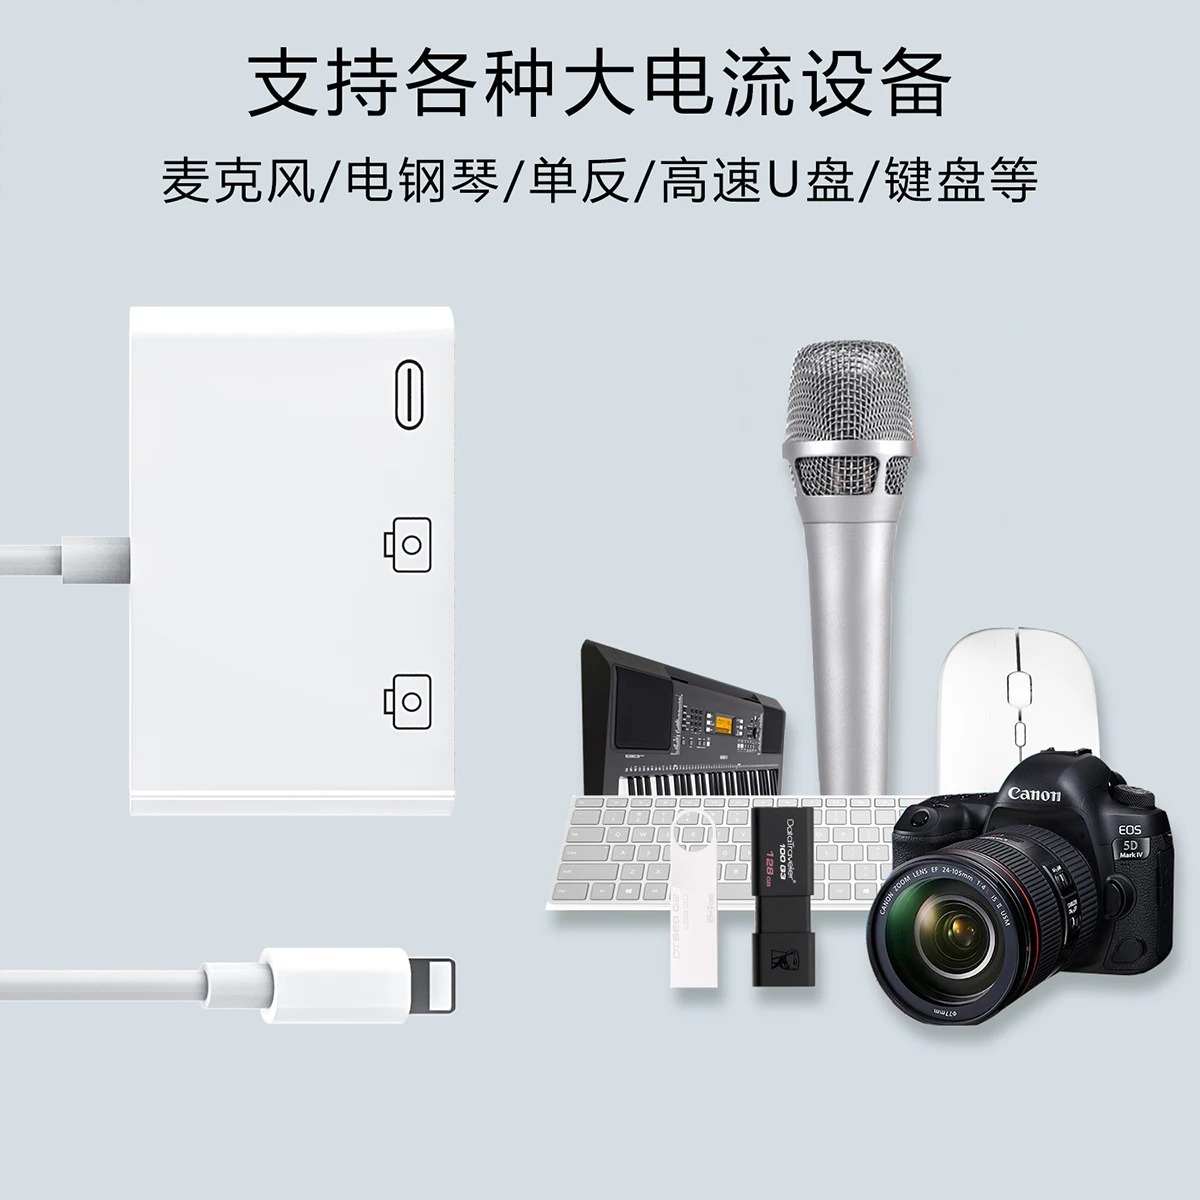 OTG кард-ридер iOS Телефон SD TF карта памяти ПИСАТЕЛЬ USB камера подключение комплект адаптер для iPhone 11 Pro XS MAX XR 6 7 8 iPad